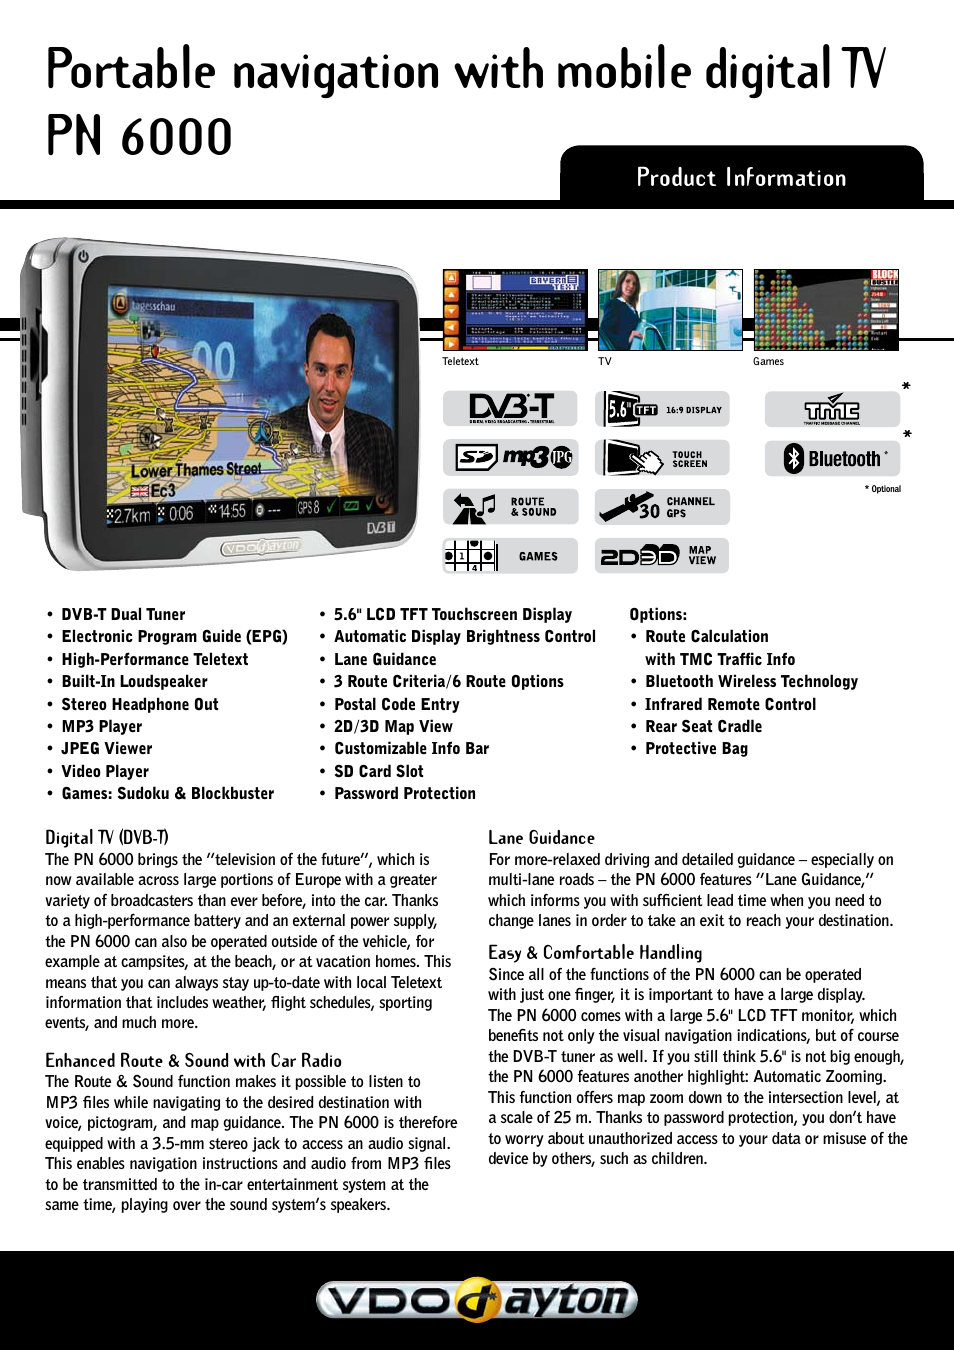 Portable Navigation with Mobile Digital TV PN 6000